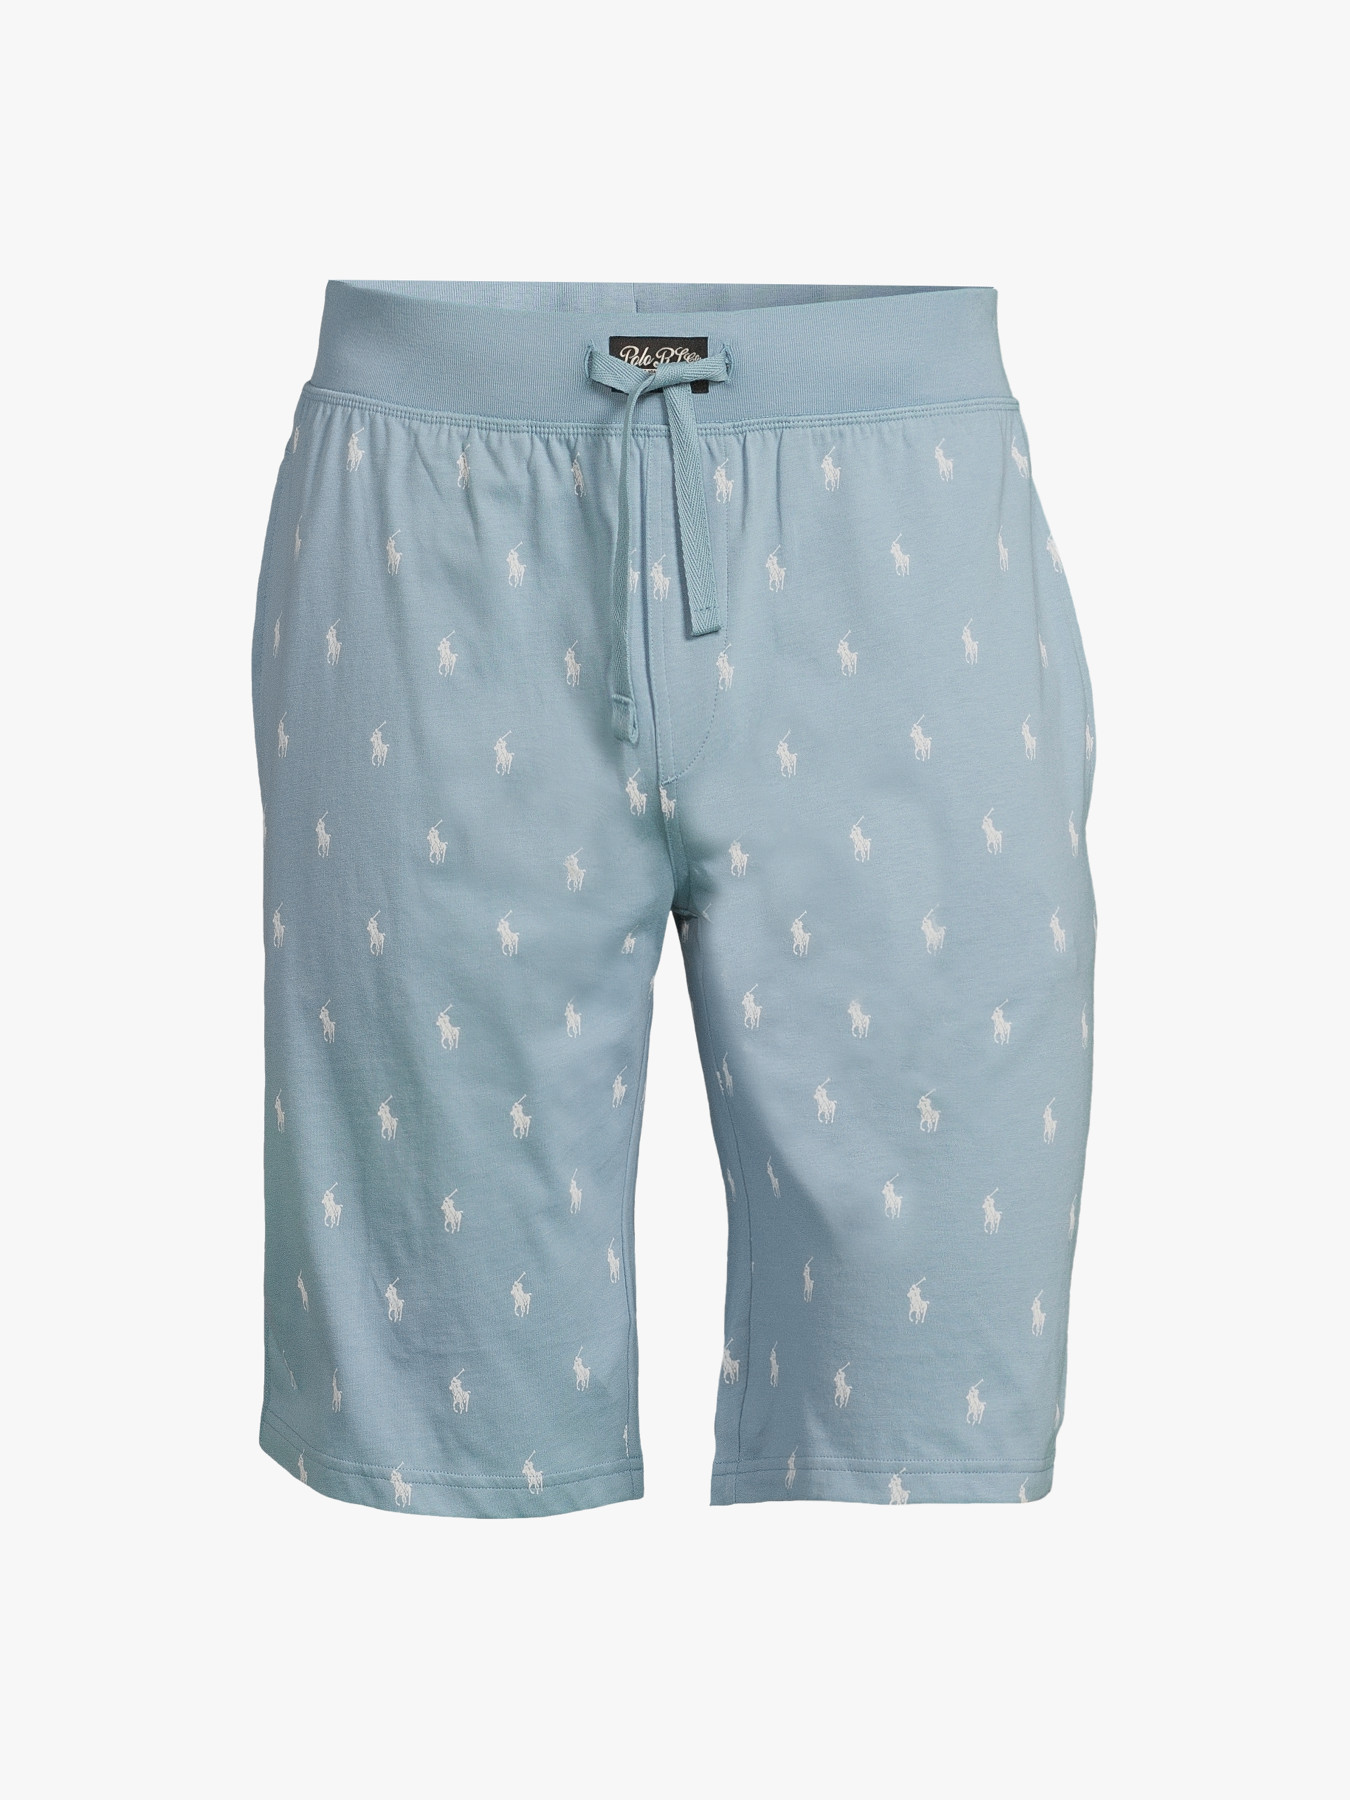 Polo Ralph Lauren Allover Pony Sleepwear Shorts | Shorts | Fenwick